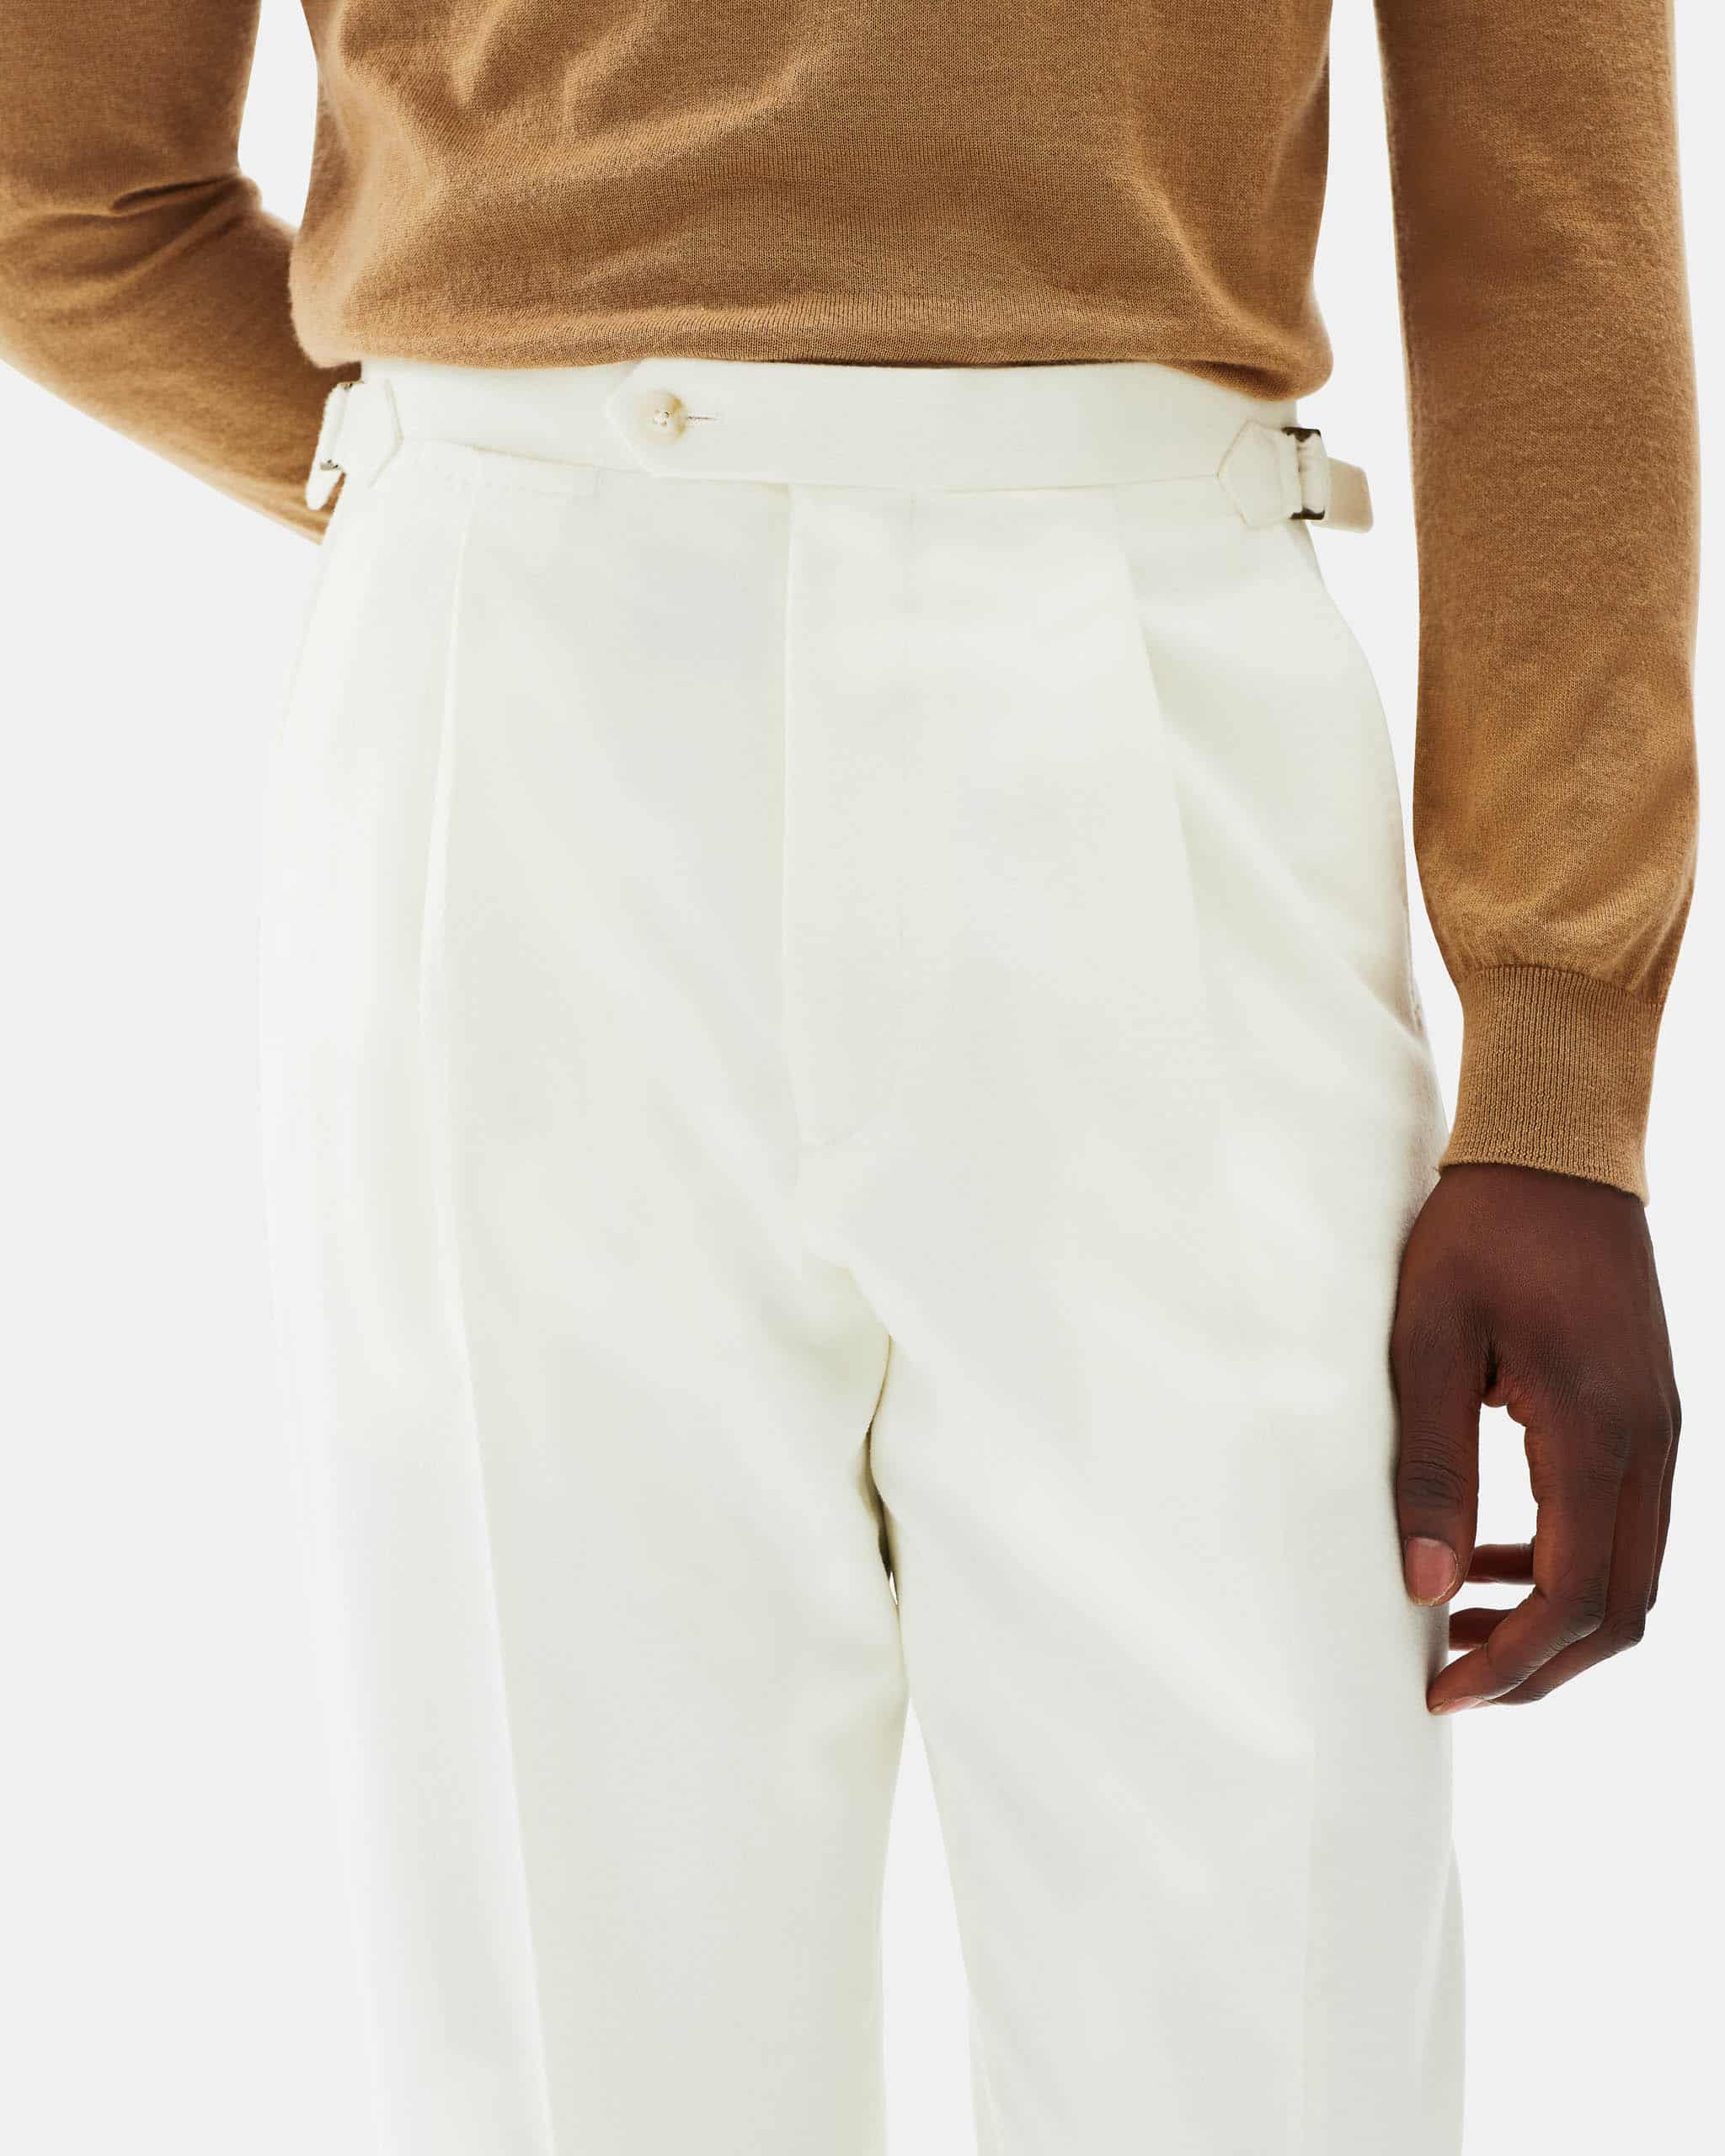 Trousers capolavoro flannel off white image 2